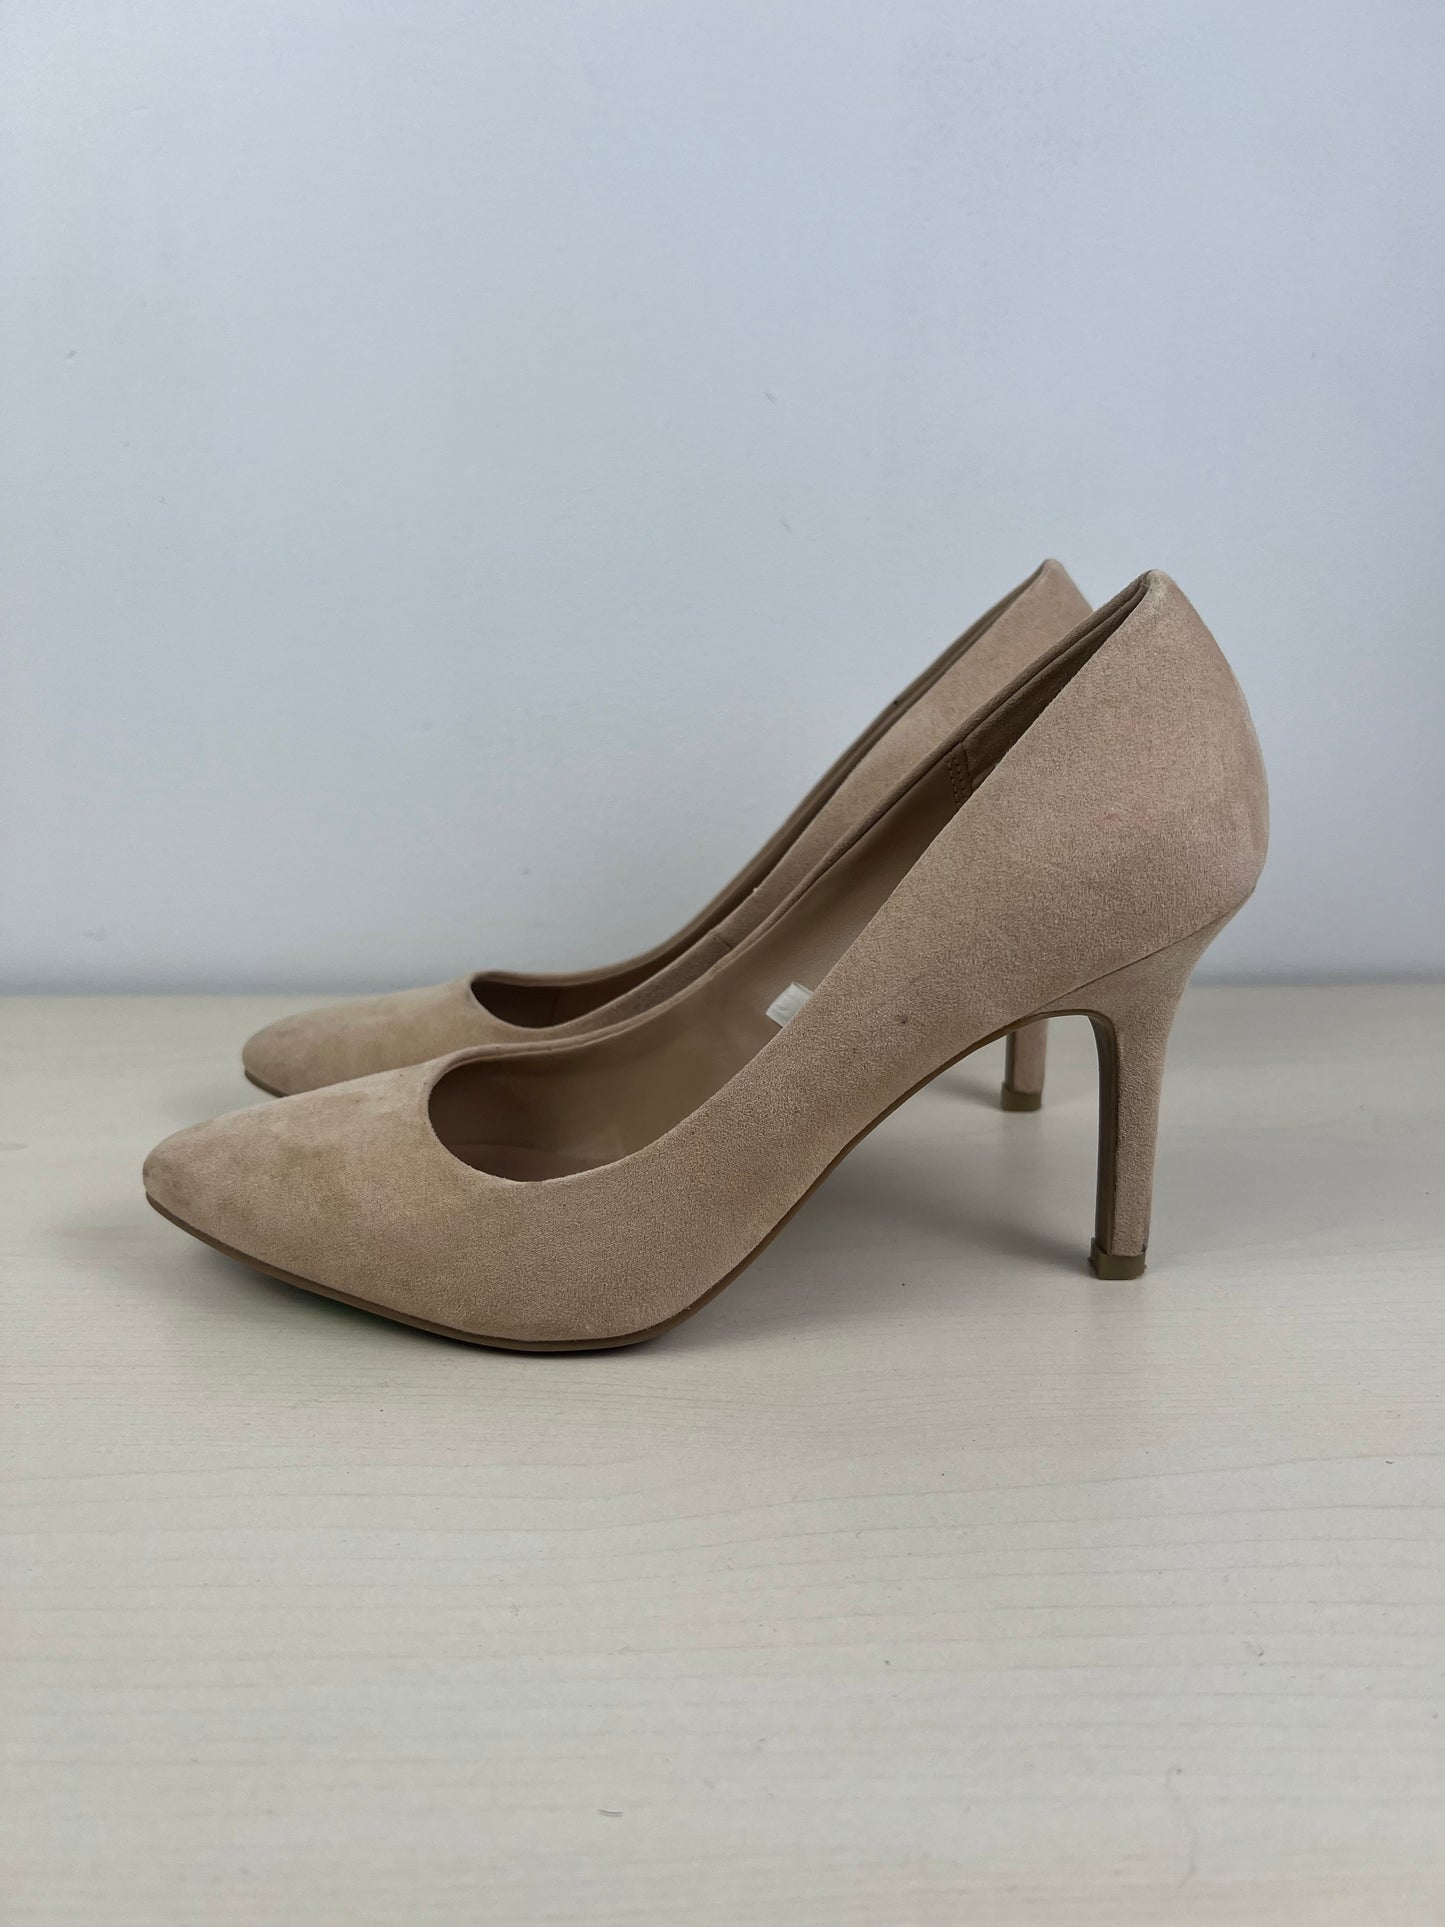 Shoes Heels Stiletto By Merona  Size: 9